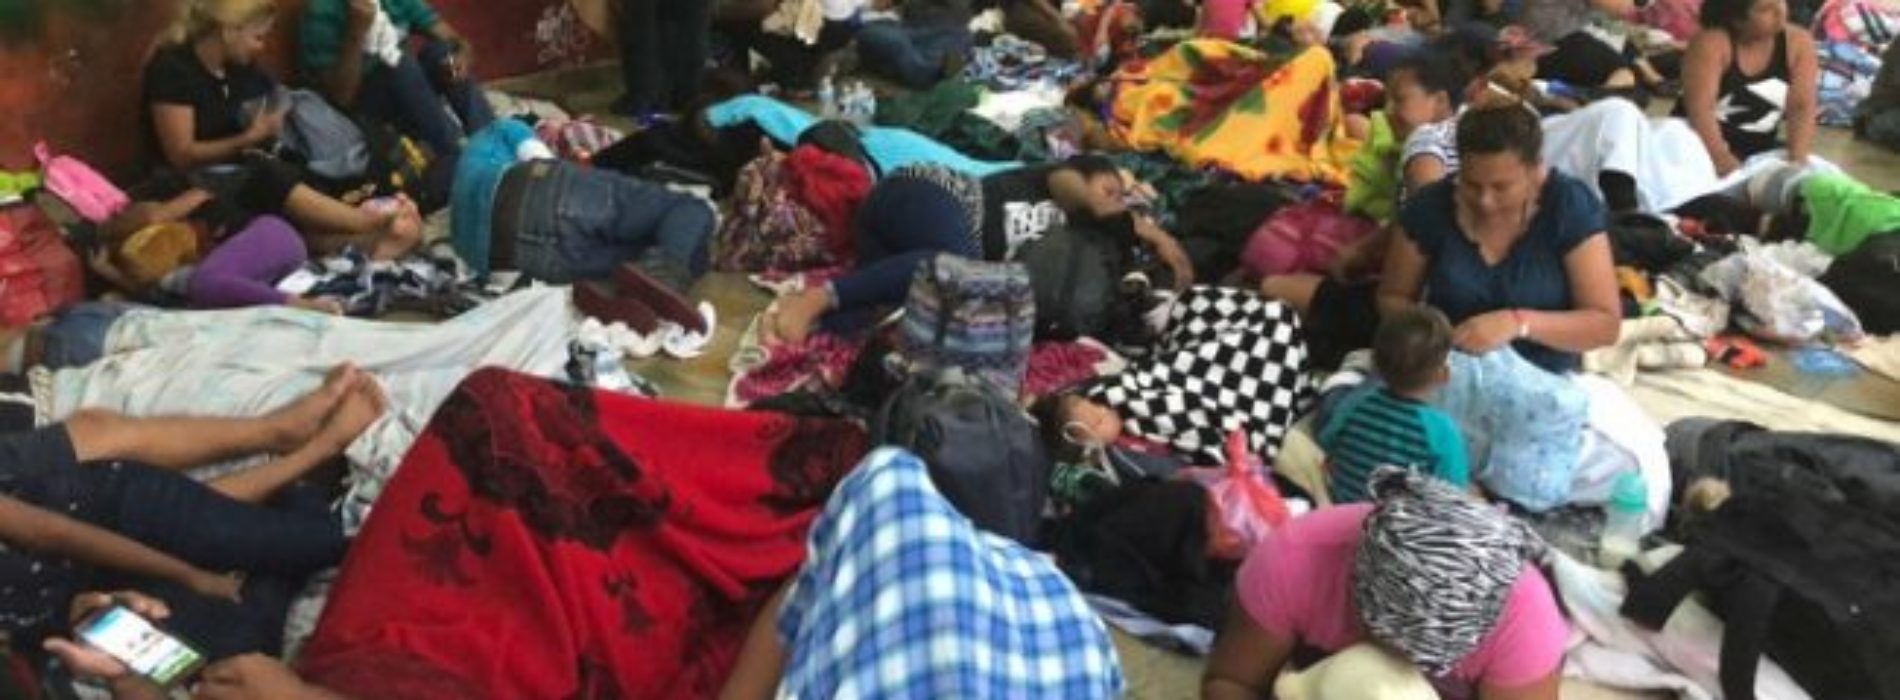 Arzobispo de Oaxaca llama a tratar dignamente a
migrantes